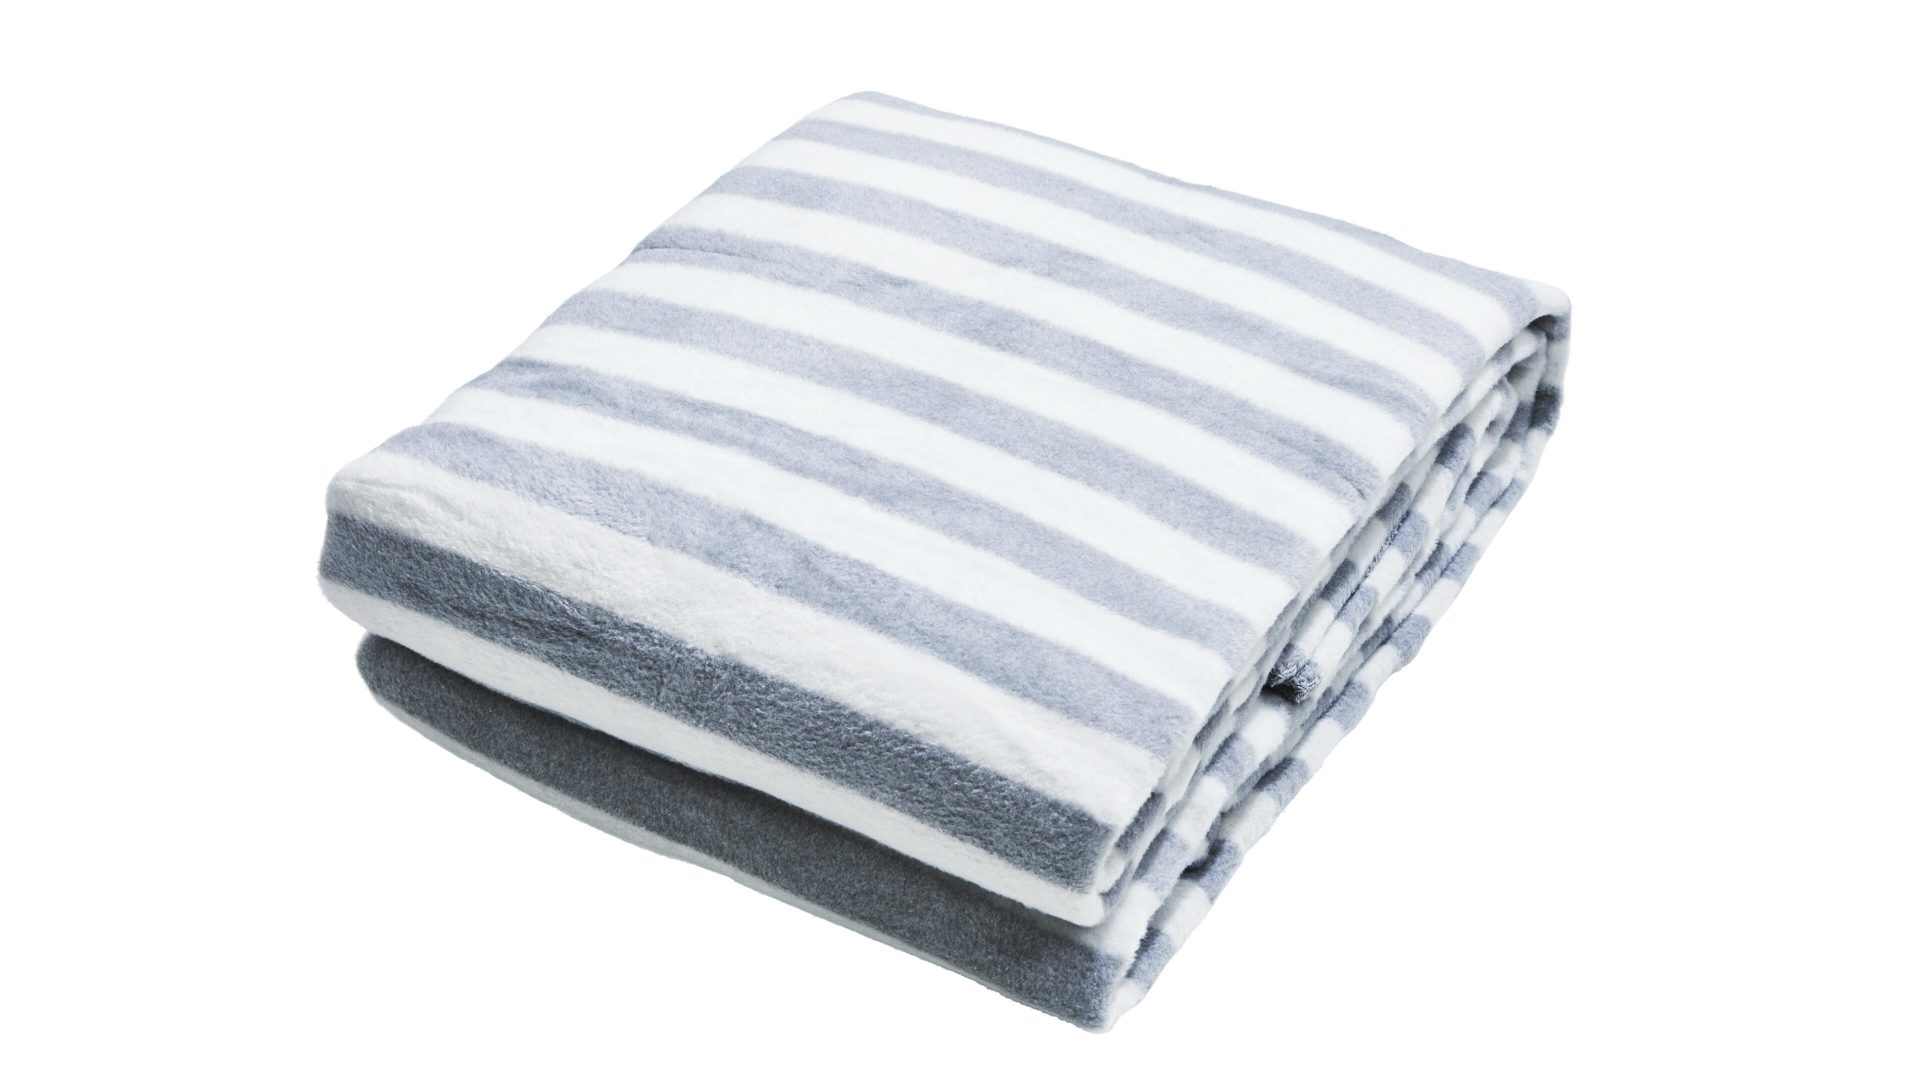 Wohndecke Done by karabel home company aus Stoff in Grau done Wohndecke Blanket Stripes Silber & Weiß – ca. 150 x 200 cm